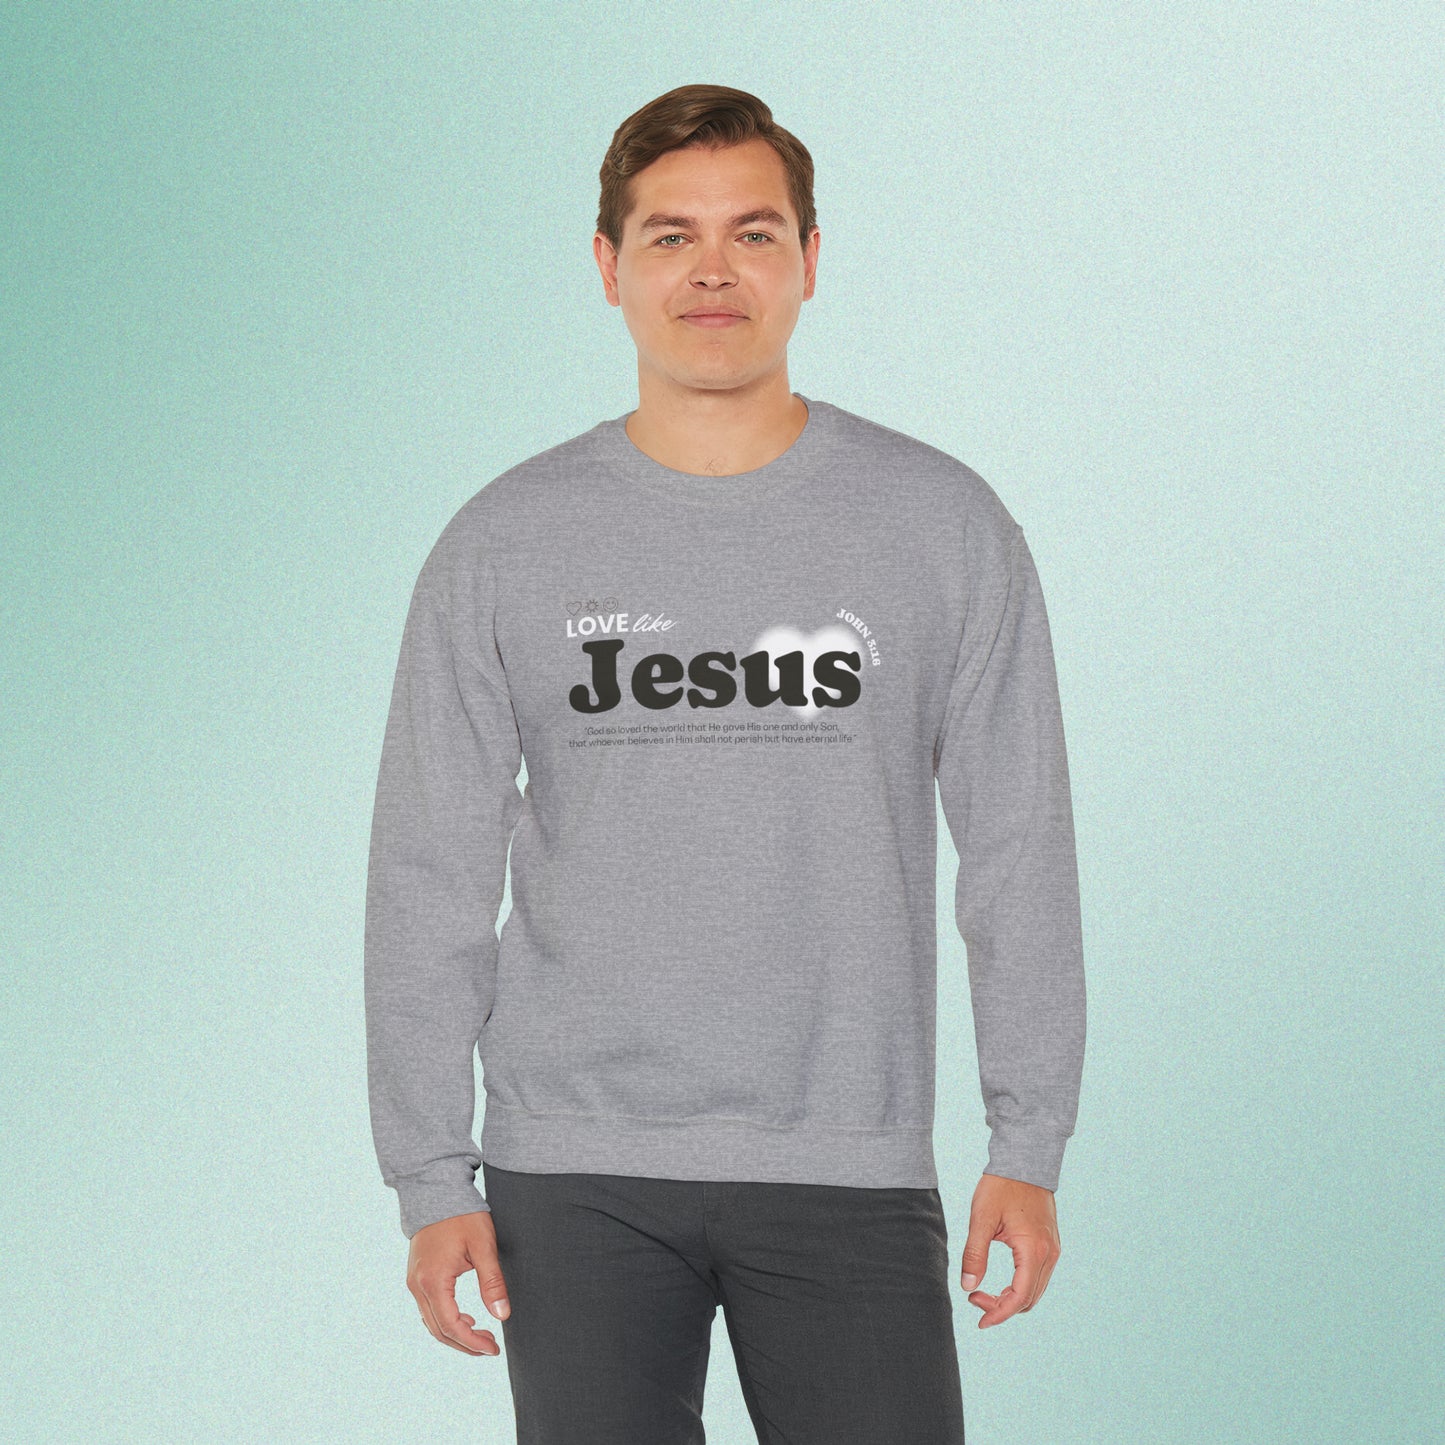 Love Like Jesus" Crewneck Sweater with John 3:16 Verse